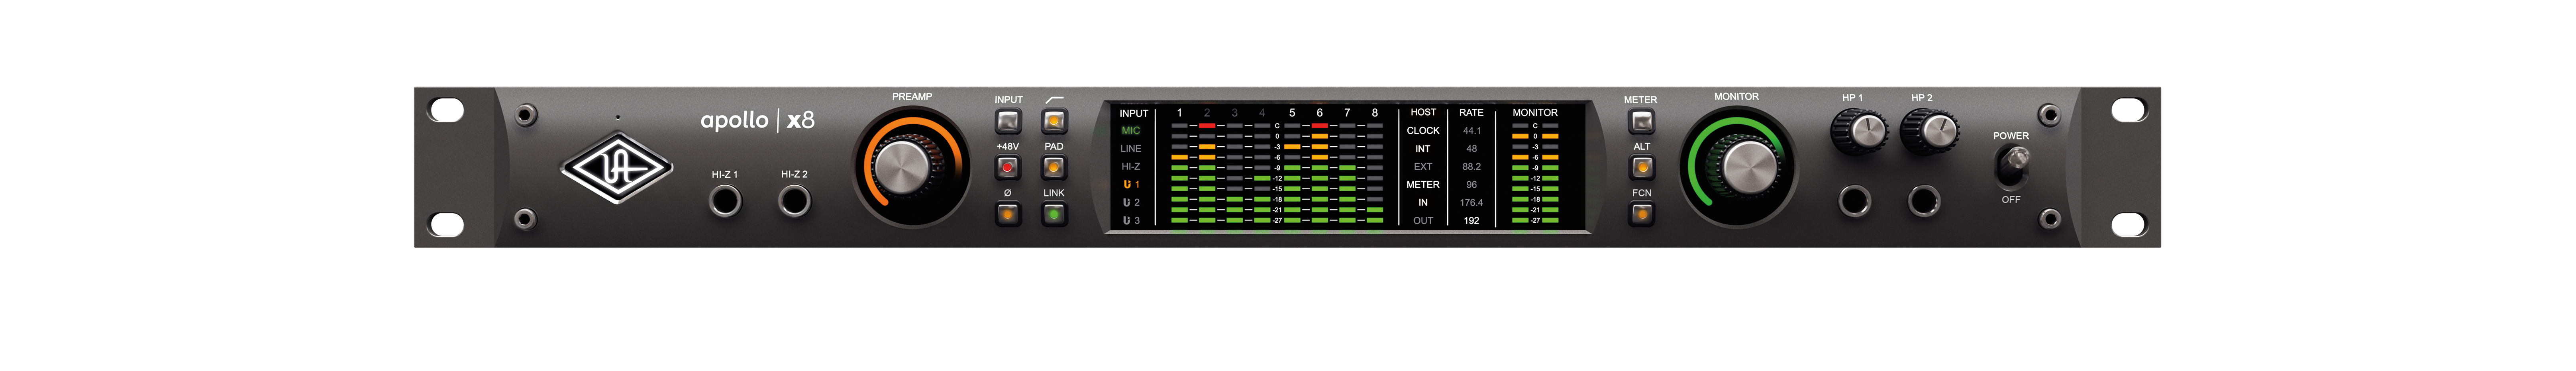 Universal Audio Apollo x8 Heritage Edition 18 x 24 Thunderbolt 3 Audio Interface with UAD DSP